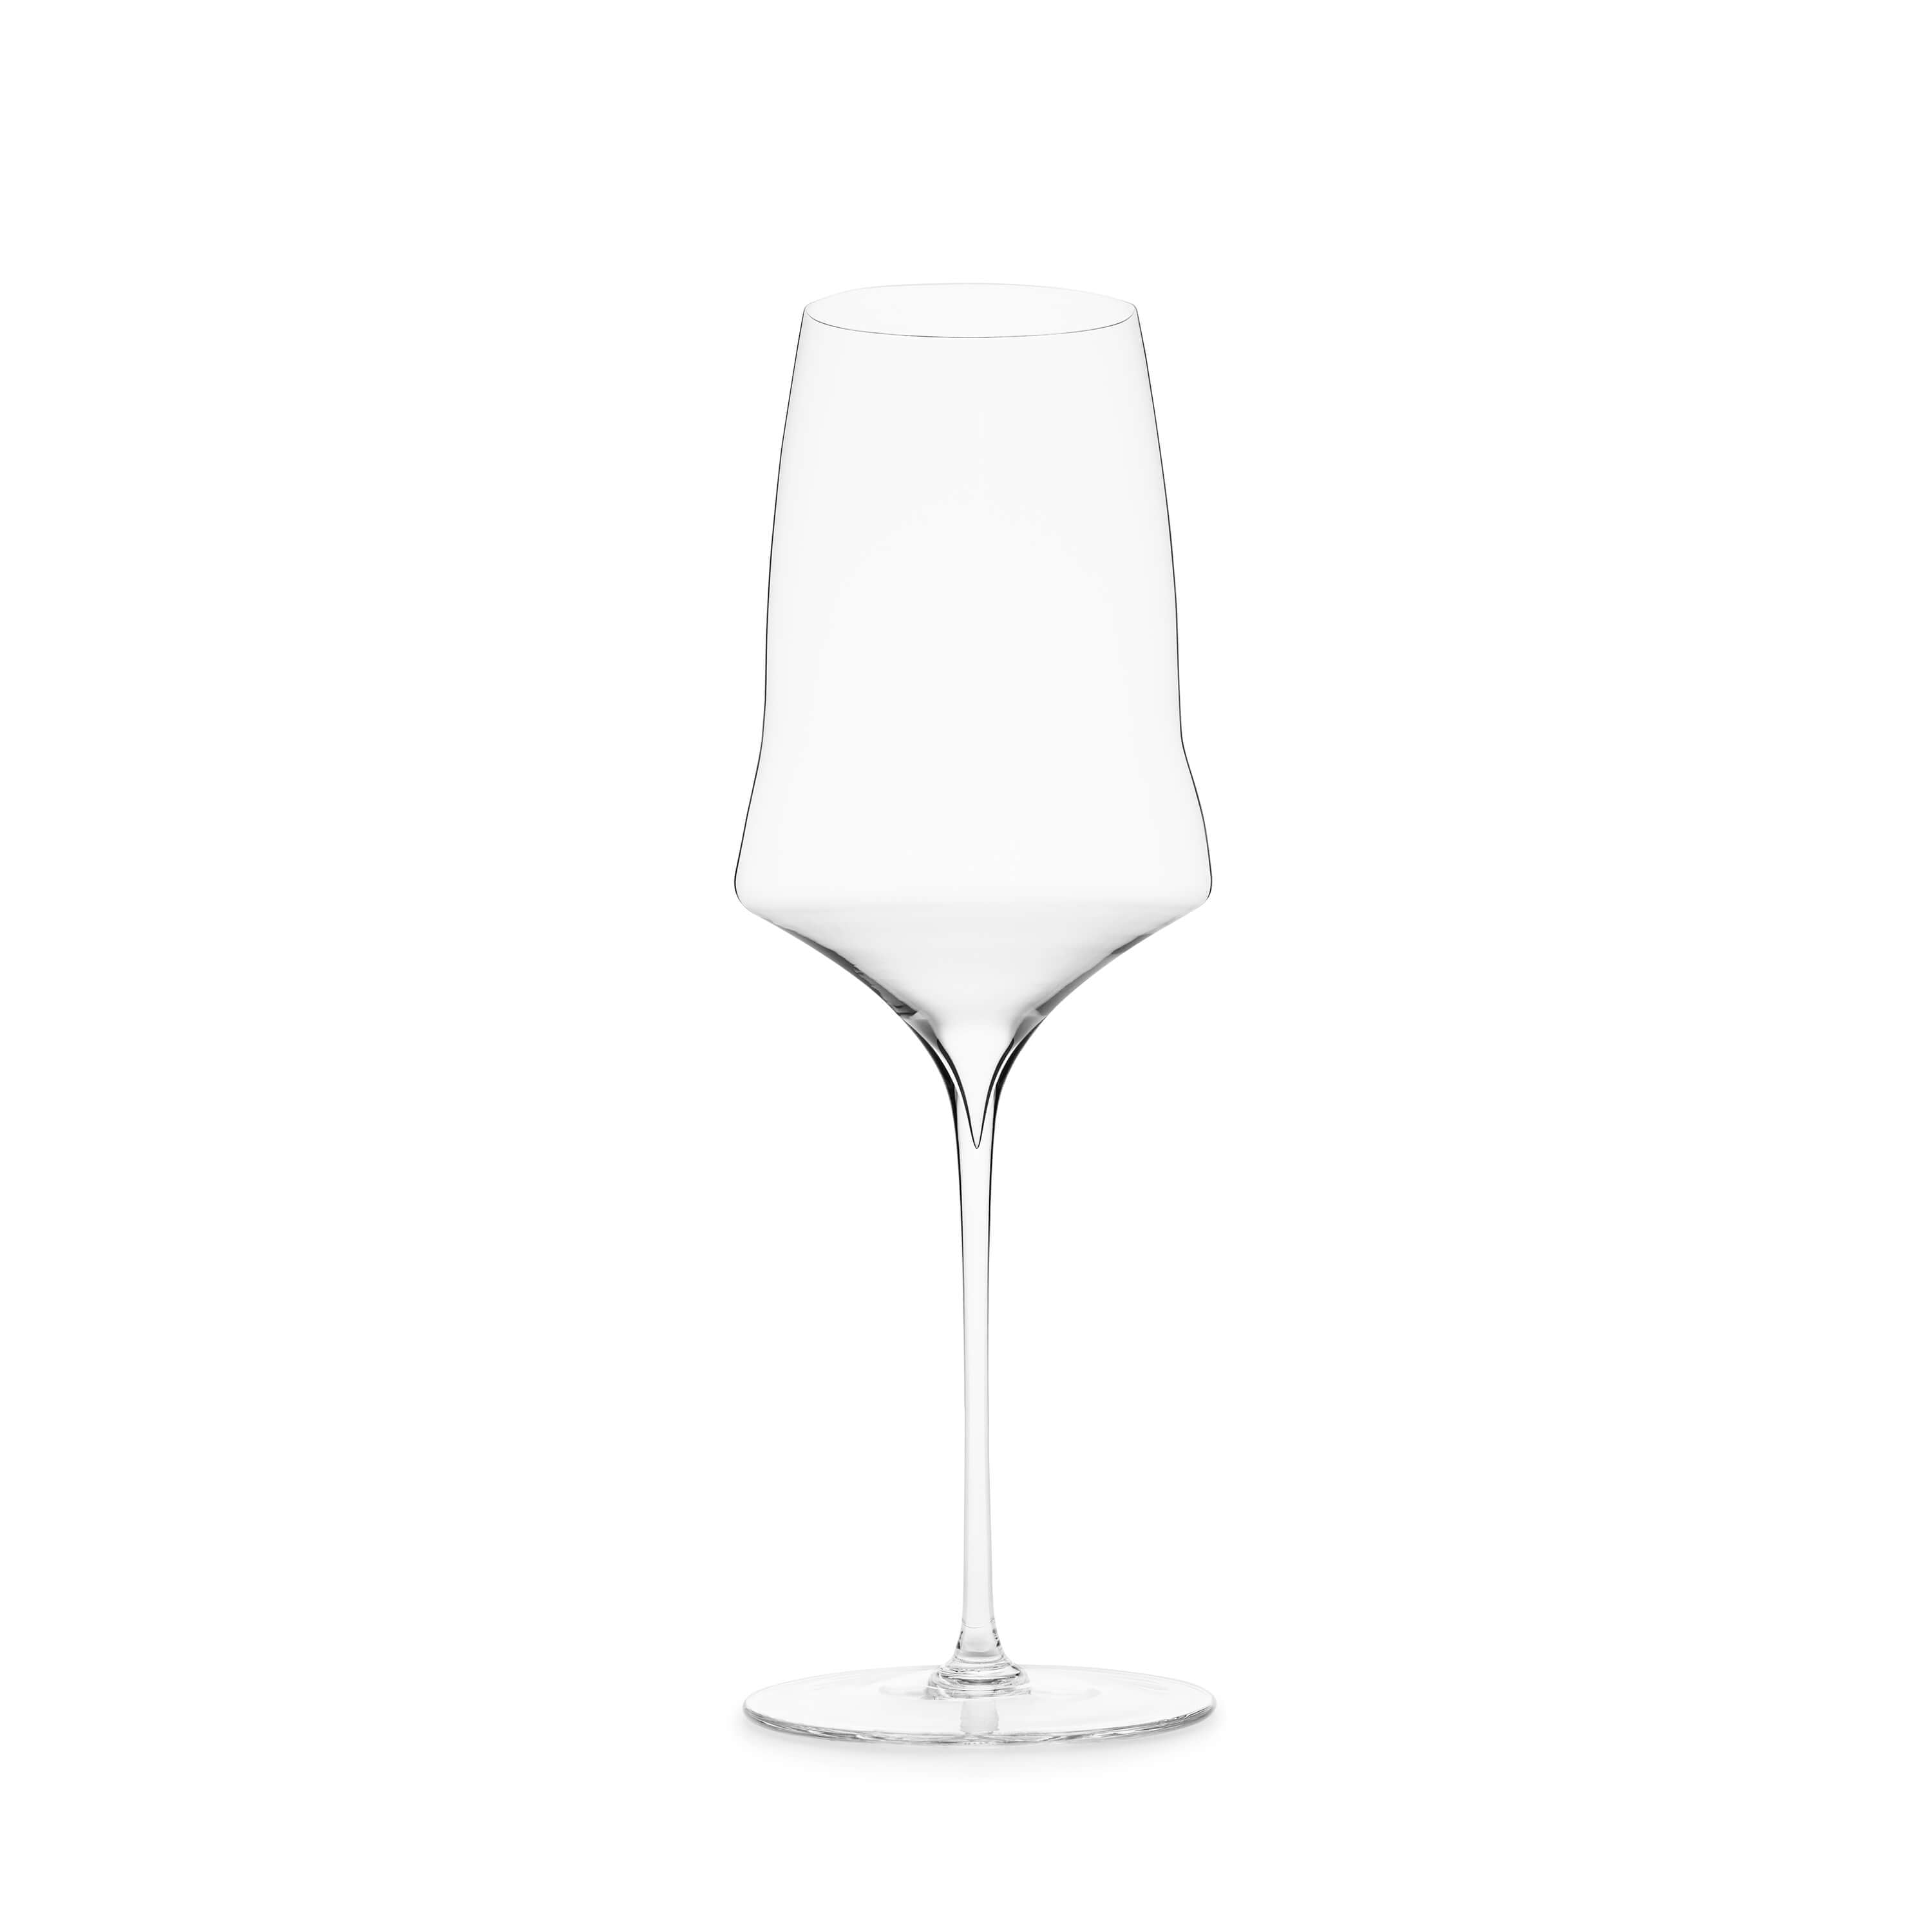 JOSEPHINE No 1 by Josephinenhütte – White wine glass #Set_Single Glass